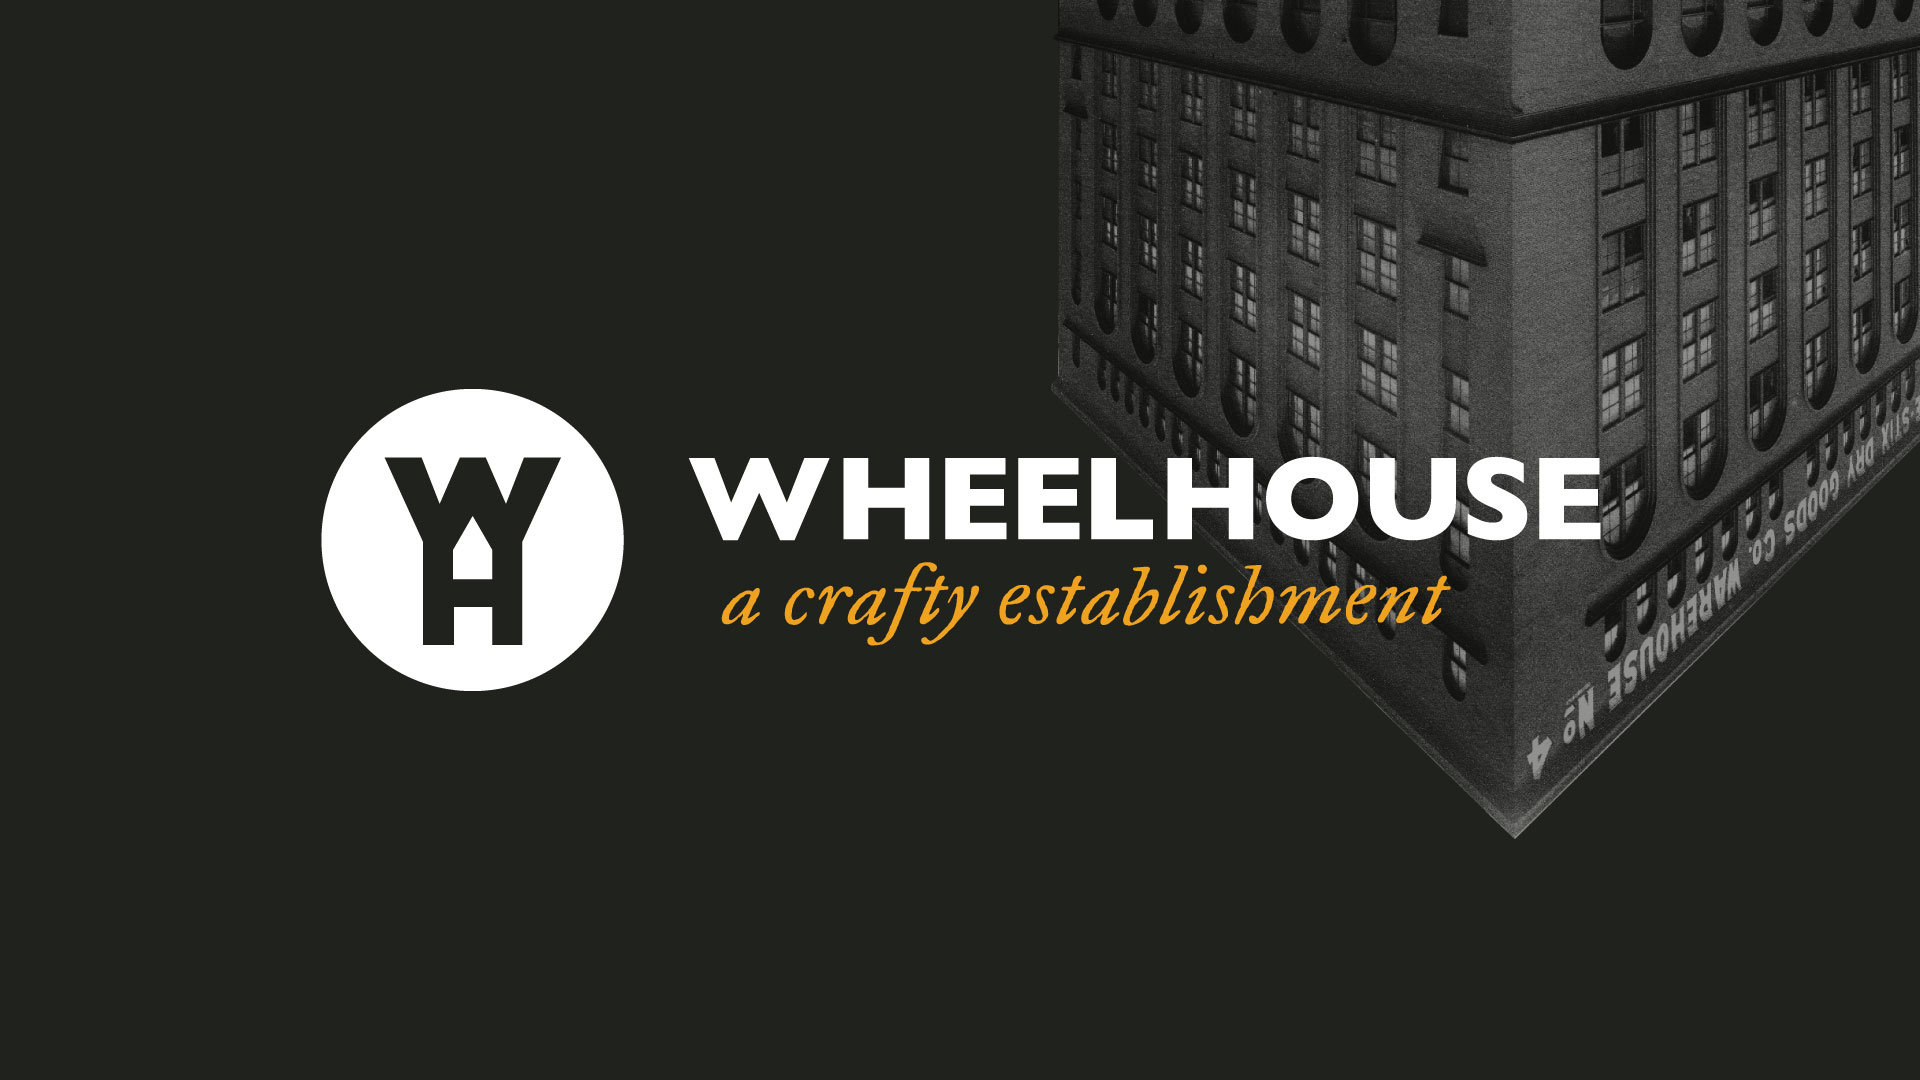 Branding, menu and website design for Wheelhouse in St. Louis